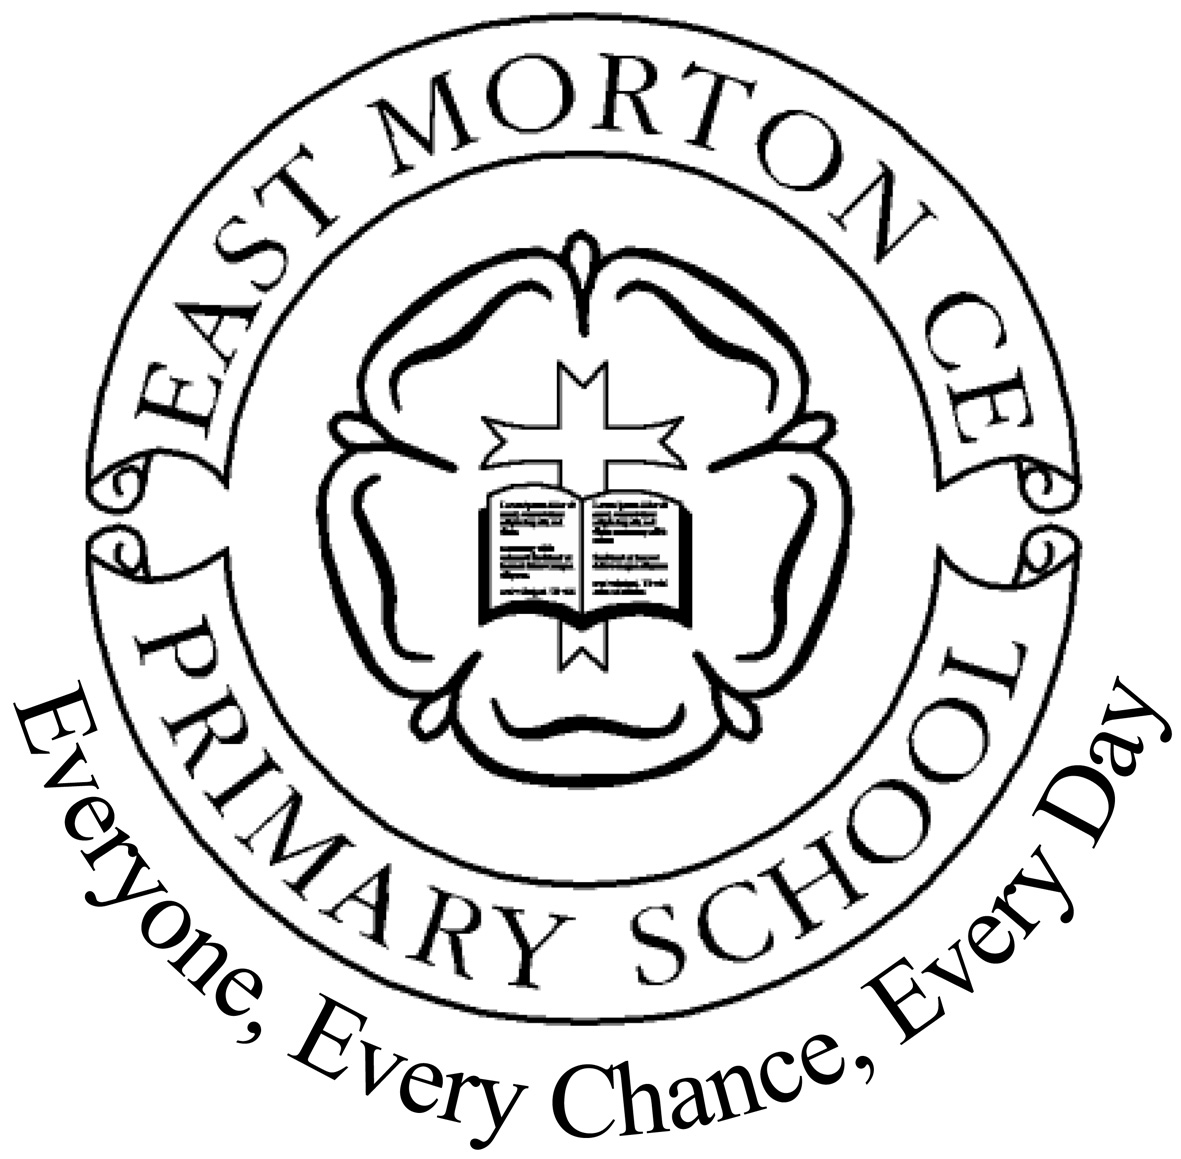 East Morton CofE Primary School logo